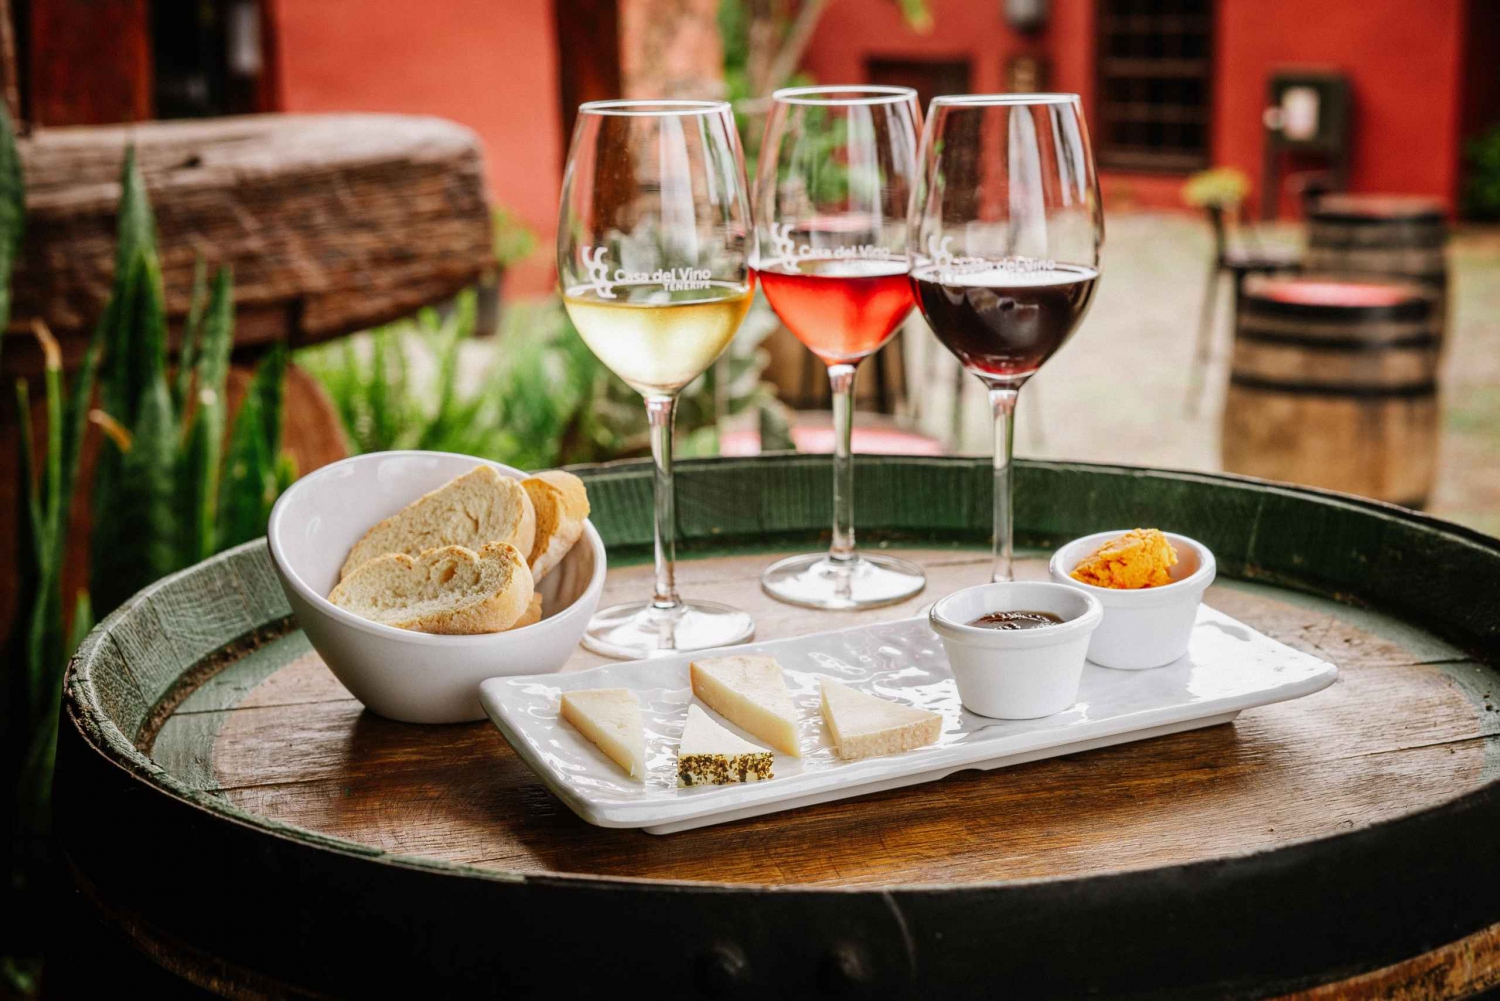 Tenerife: Guided Tour at Casa del Vino & Wine Tasting